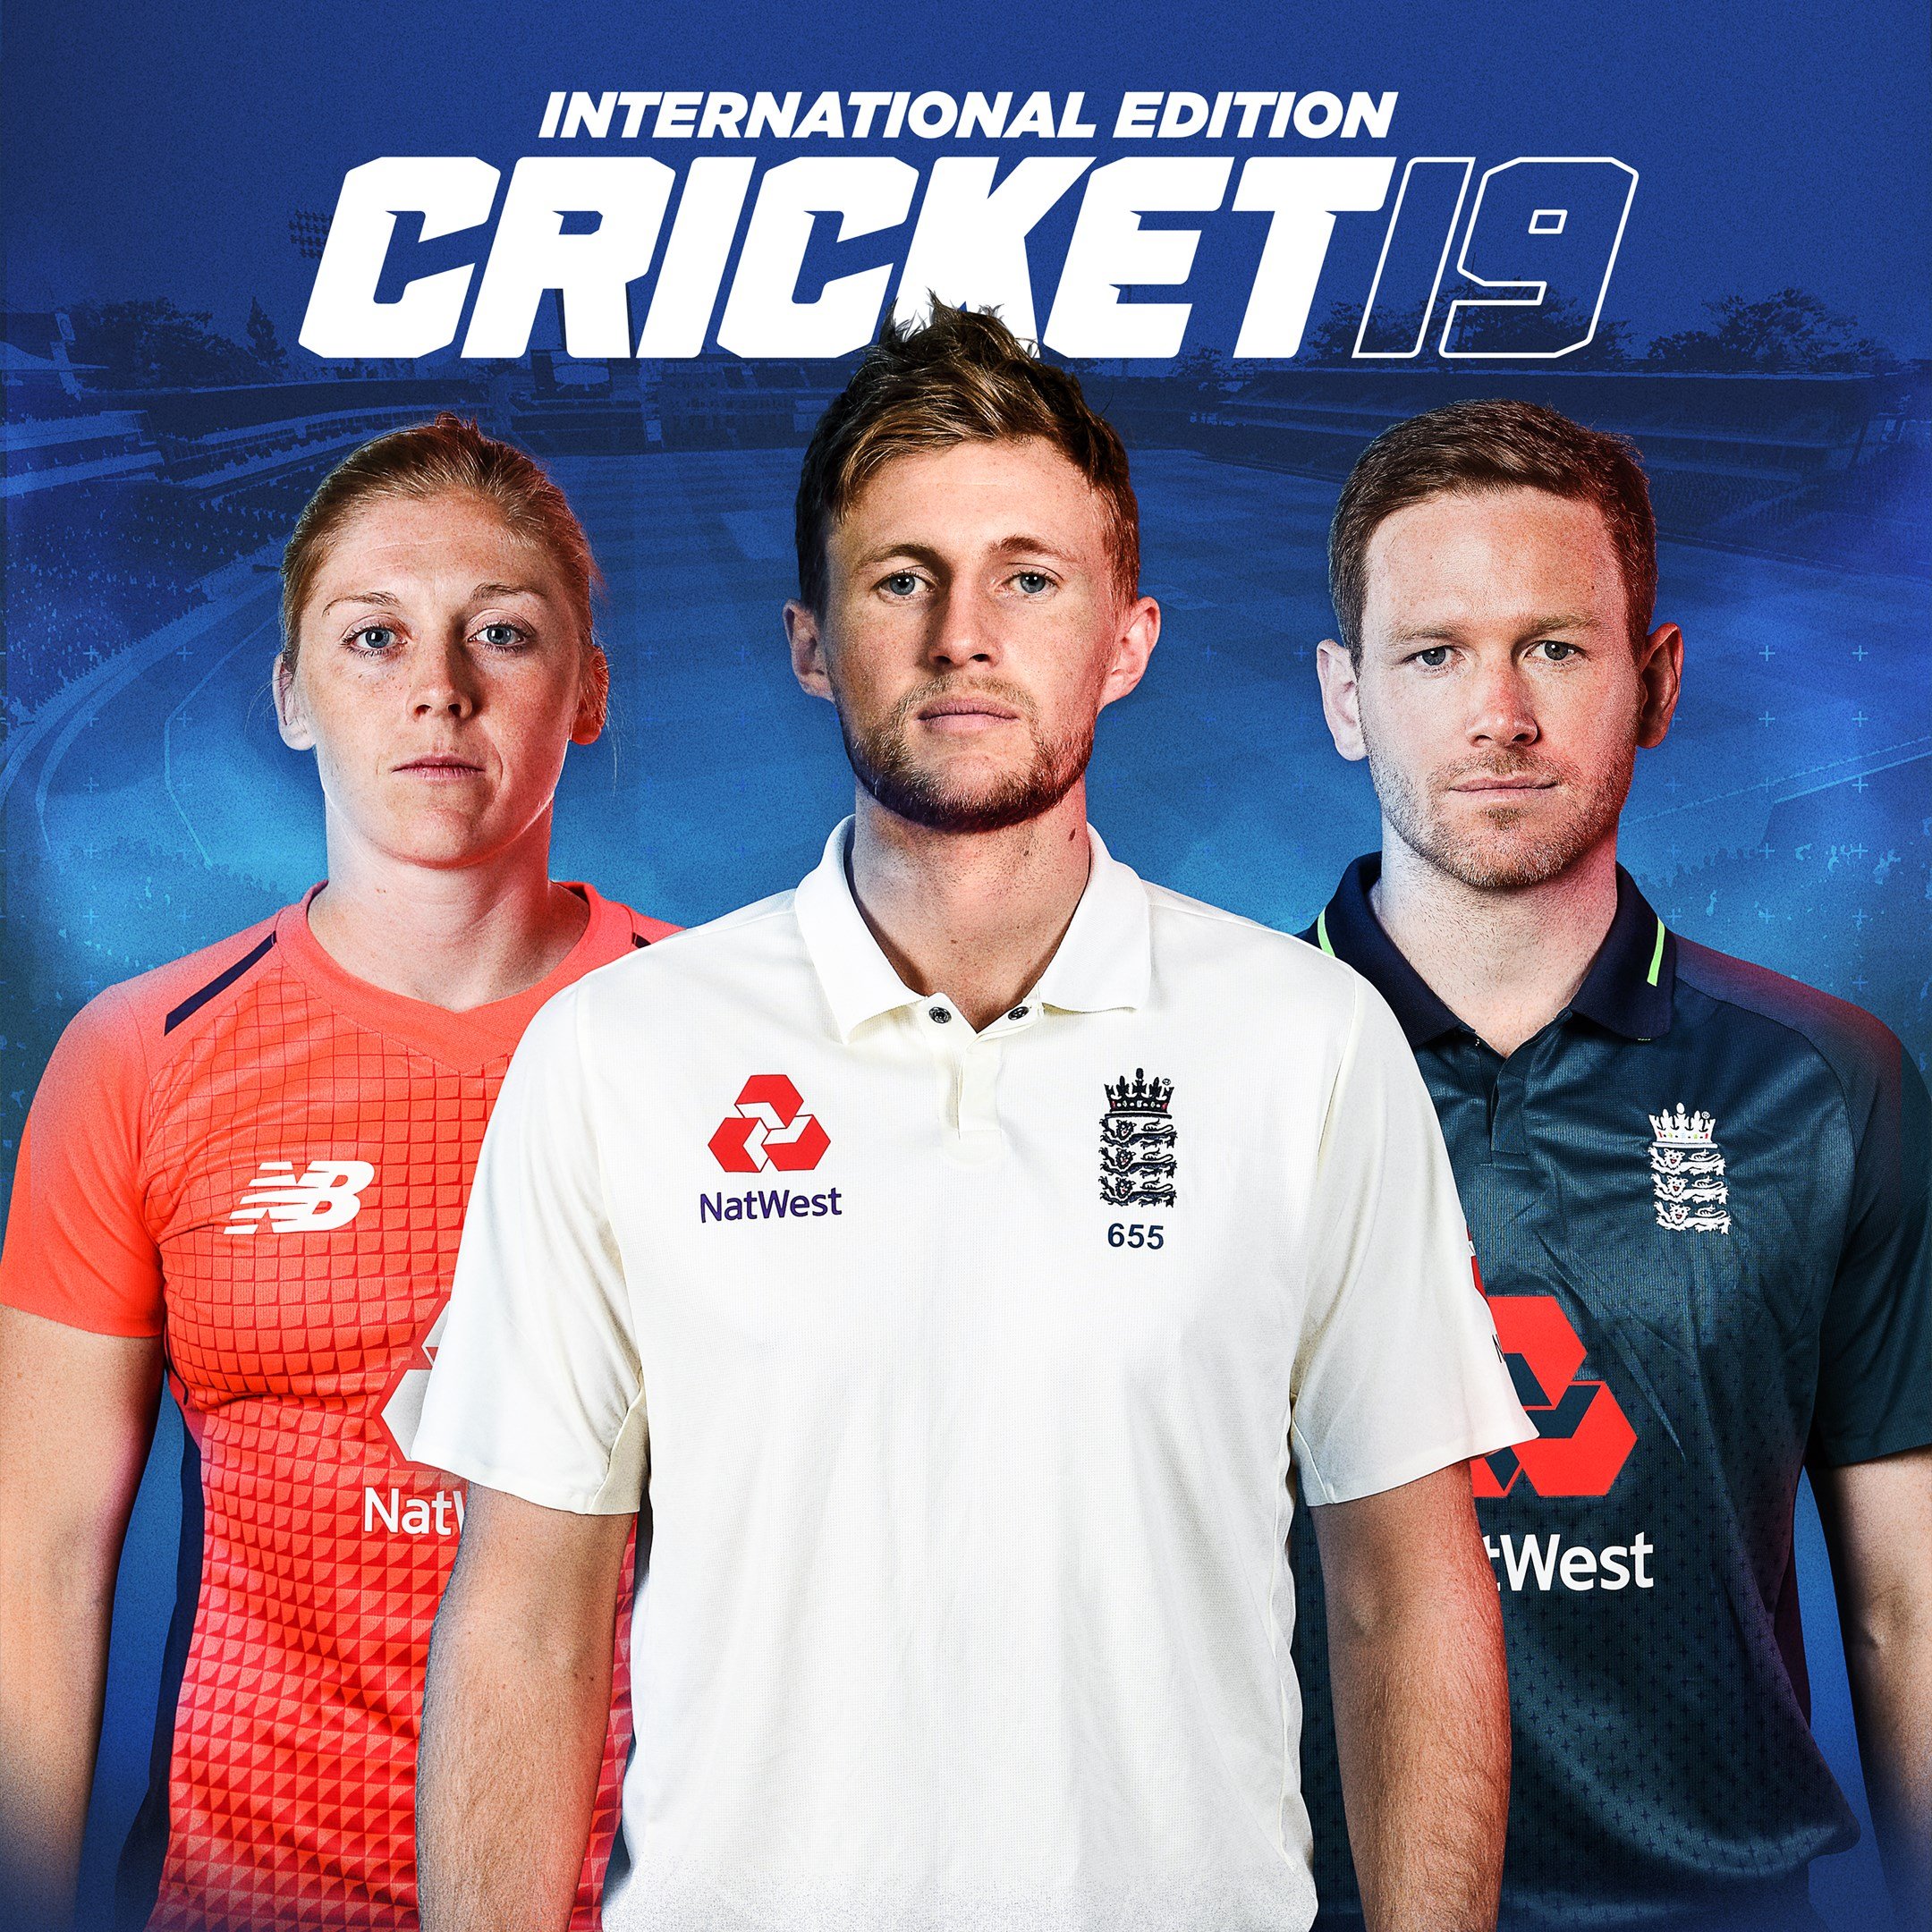 Cricket 19 Windows 10